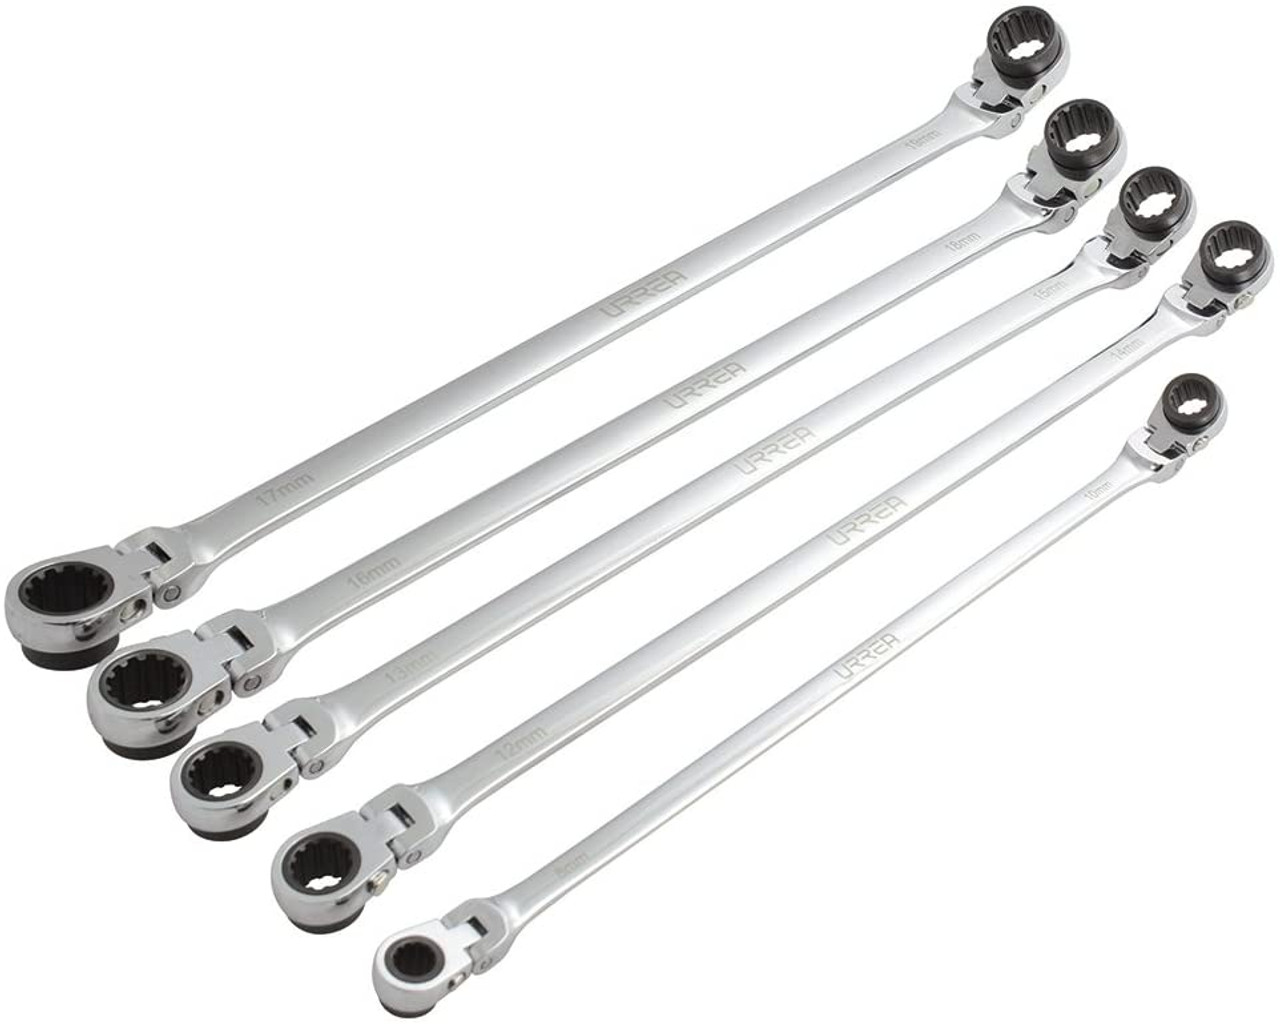 URREA Spline Metric Extra Long Flexible Ratcheting Double Box Wrench Set,11MFL5M